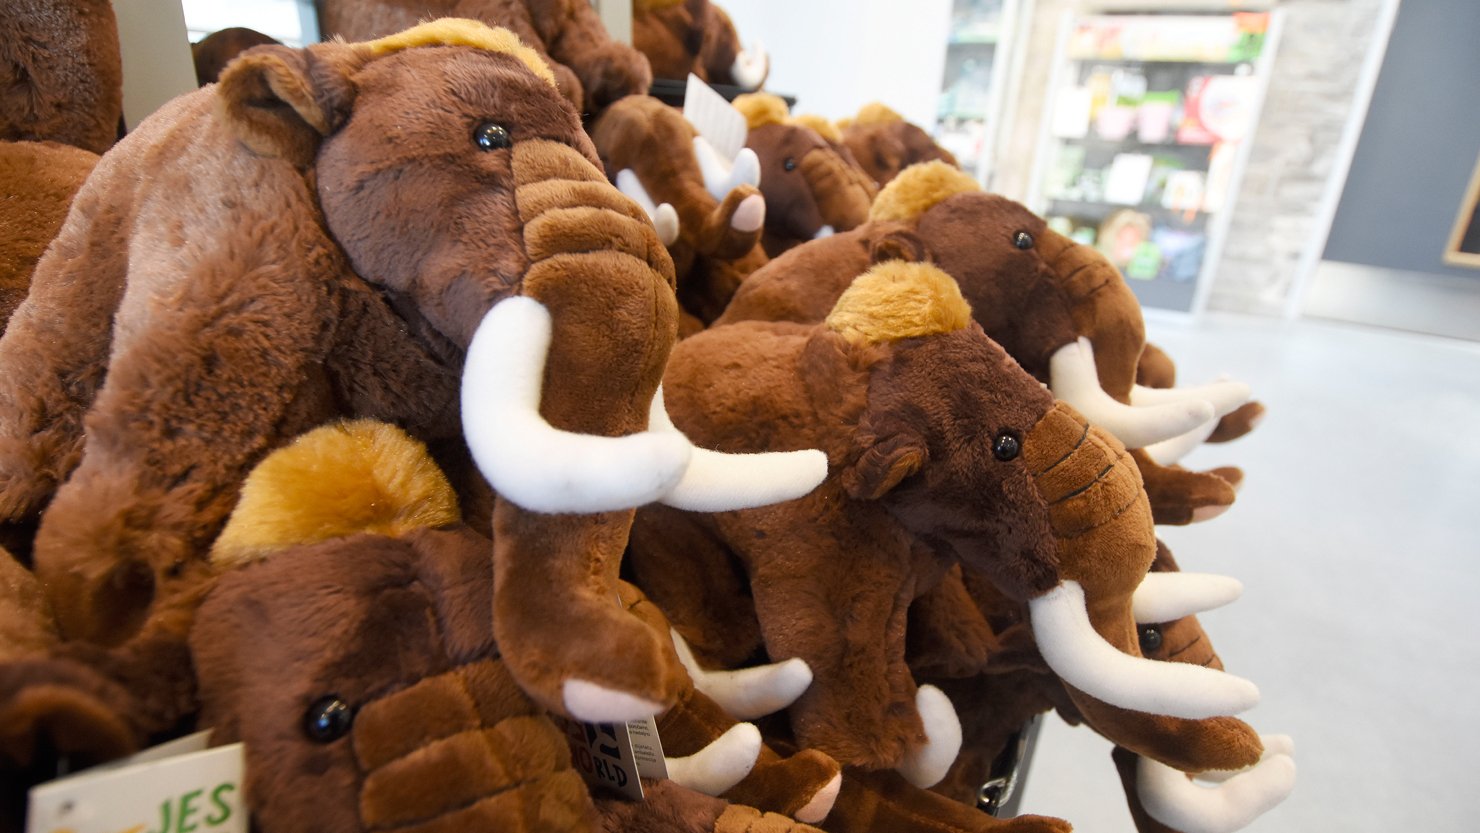 Cuddly mammoth toys in a shop